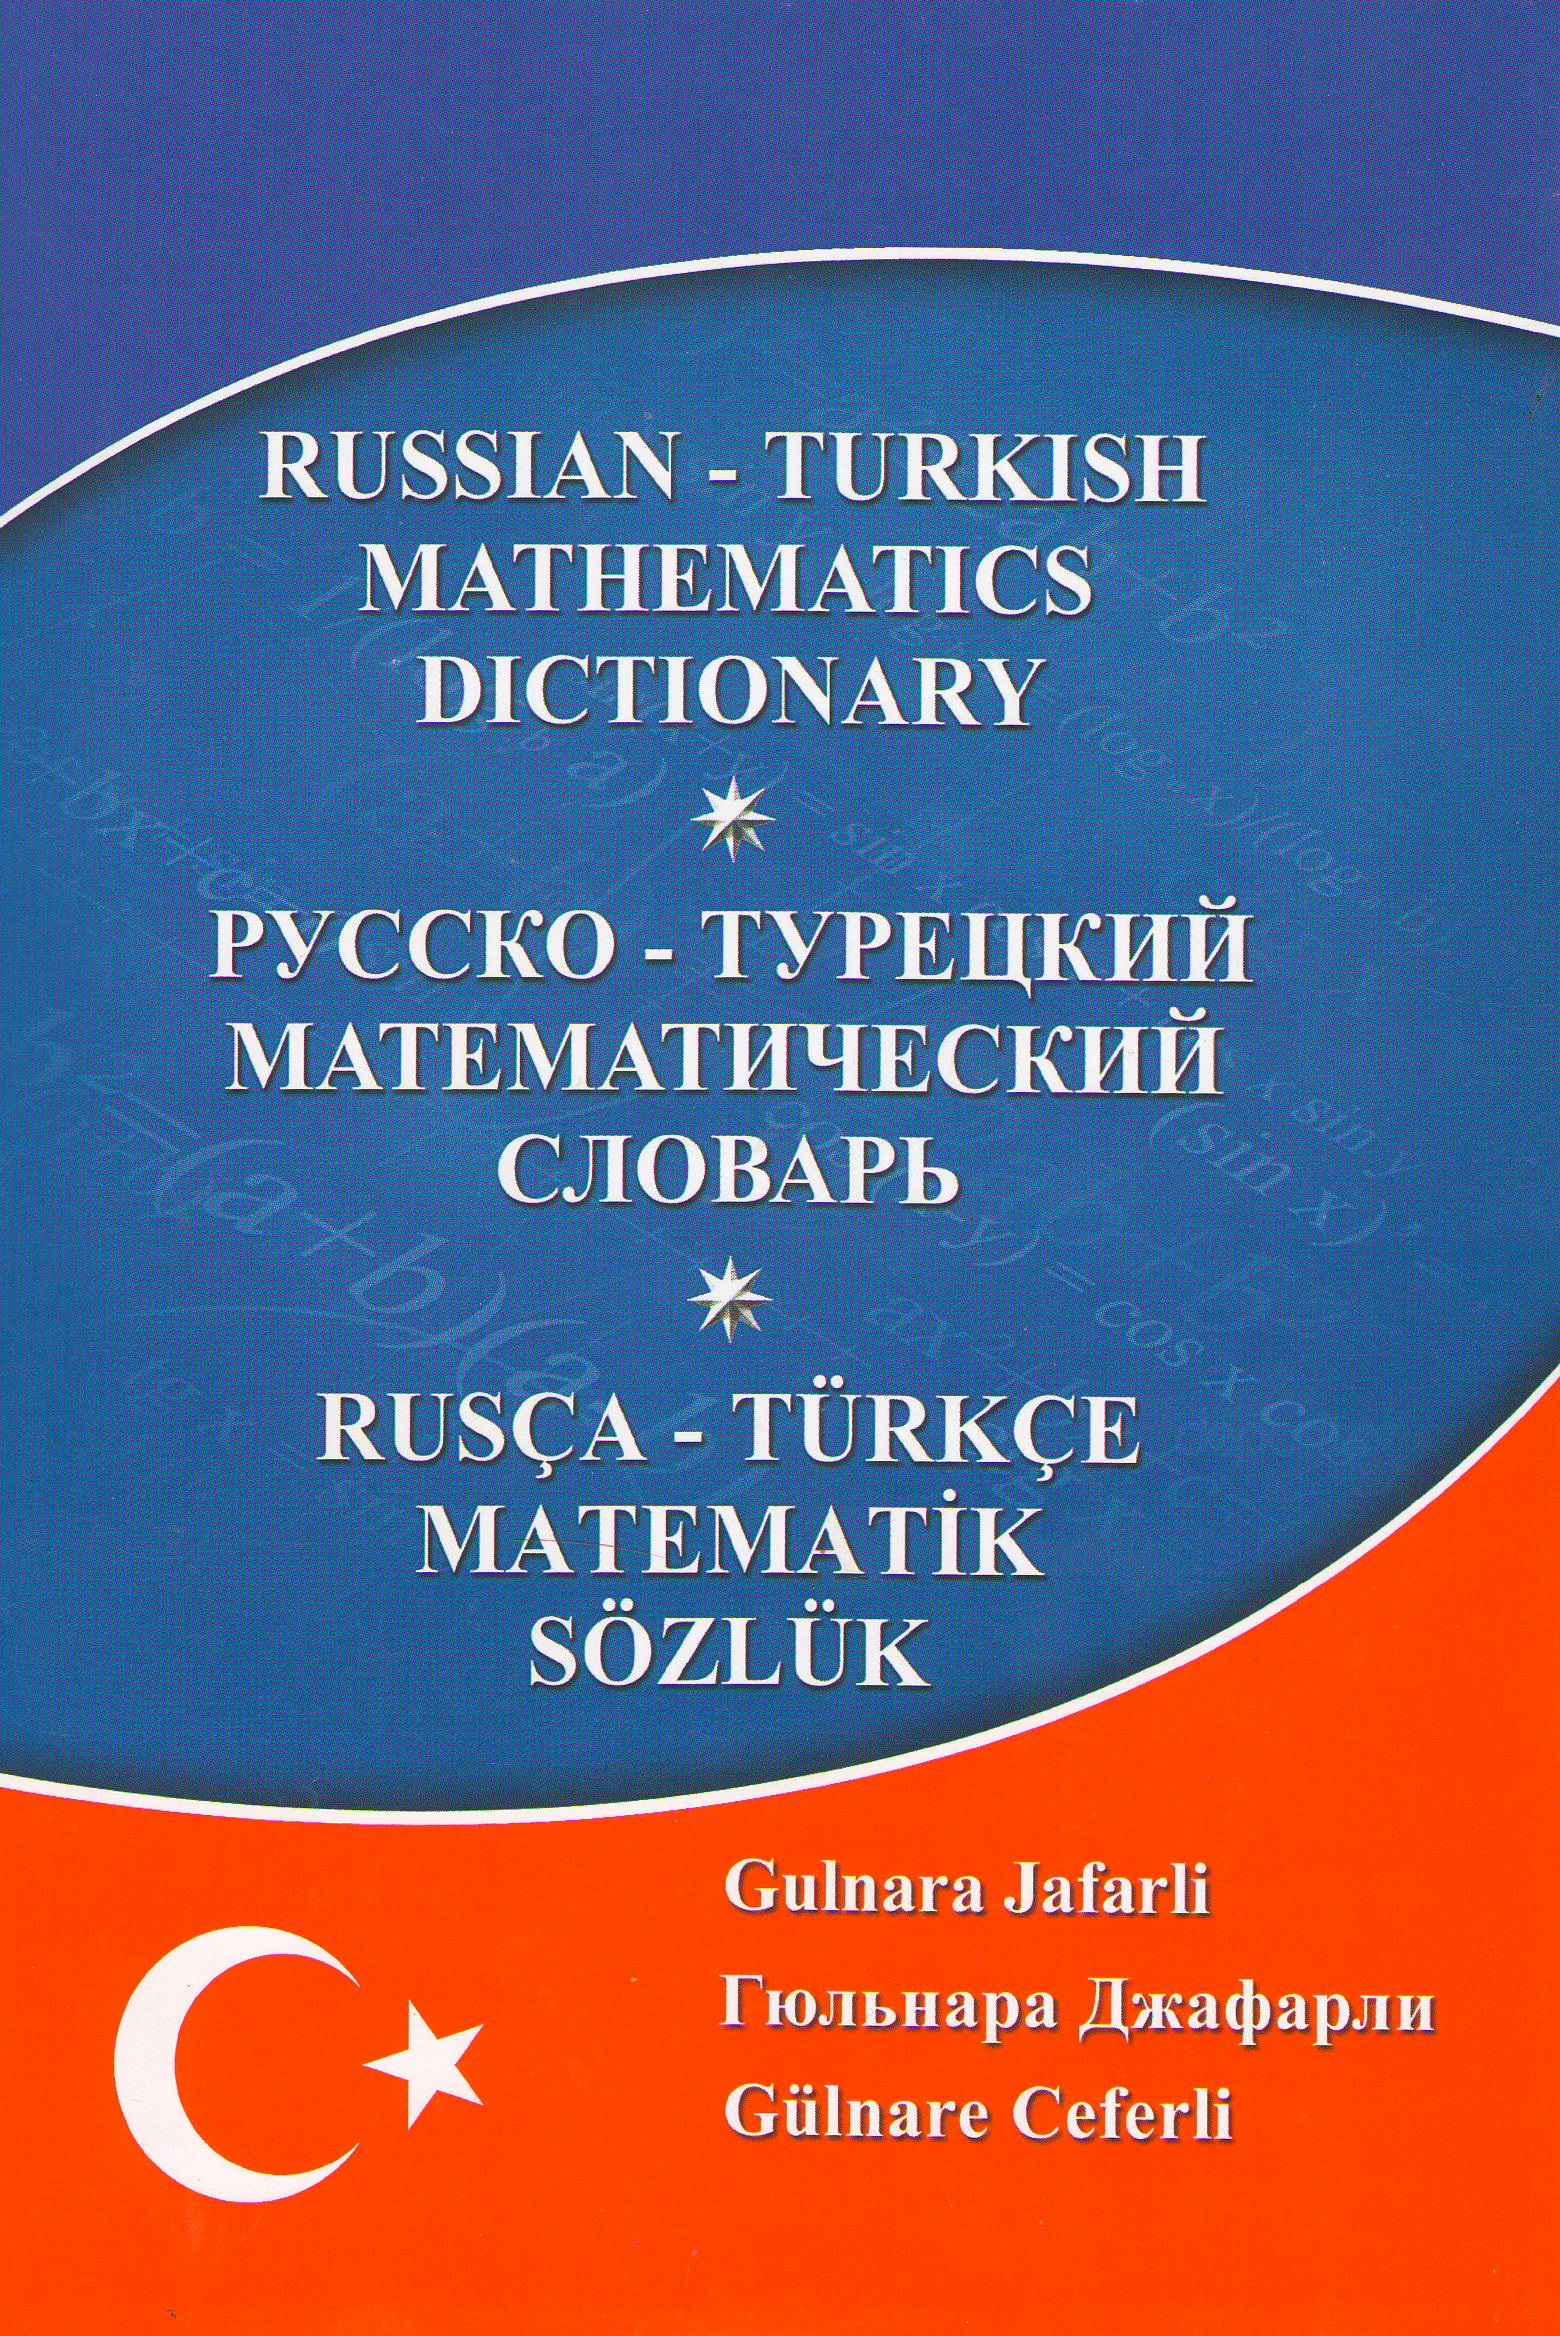 New Russian-Turkish Mathematics Dictionary Printed